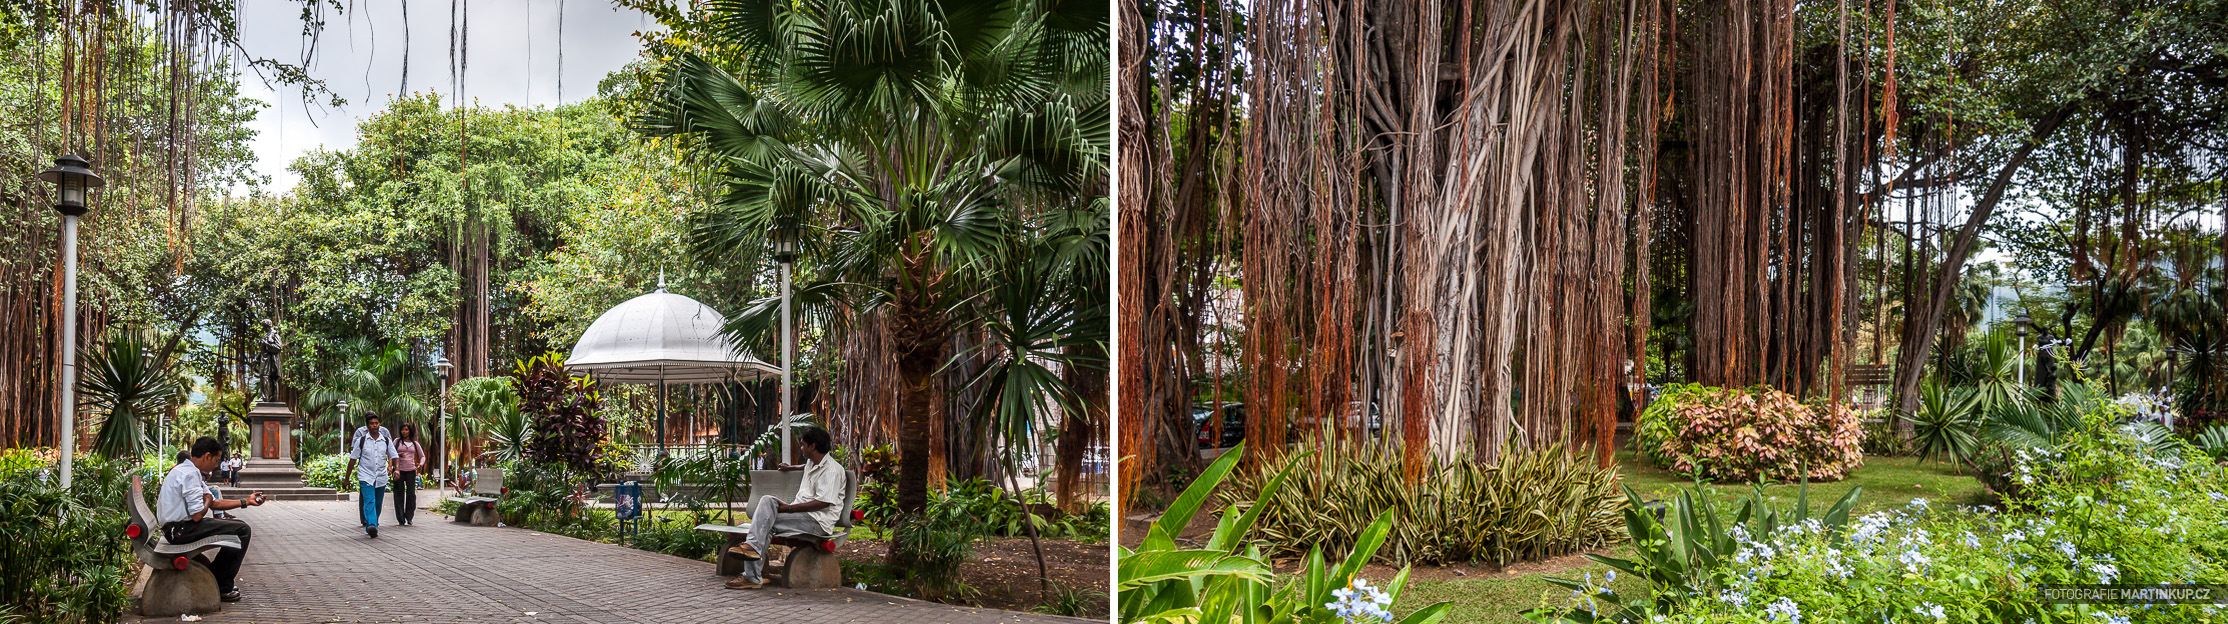 Městský park Company Gardens, Port Louis, Mauritius